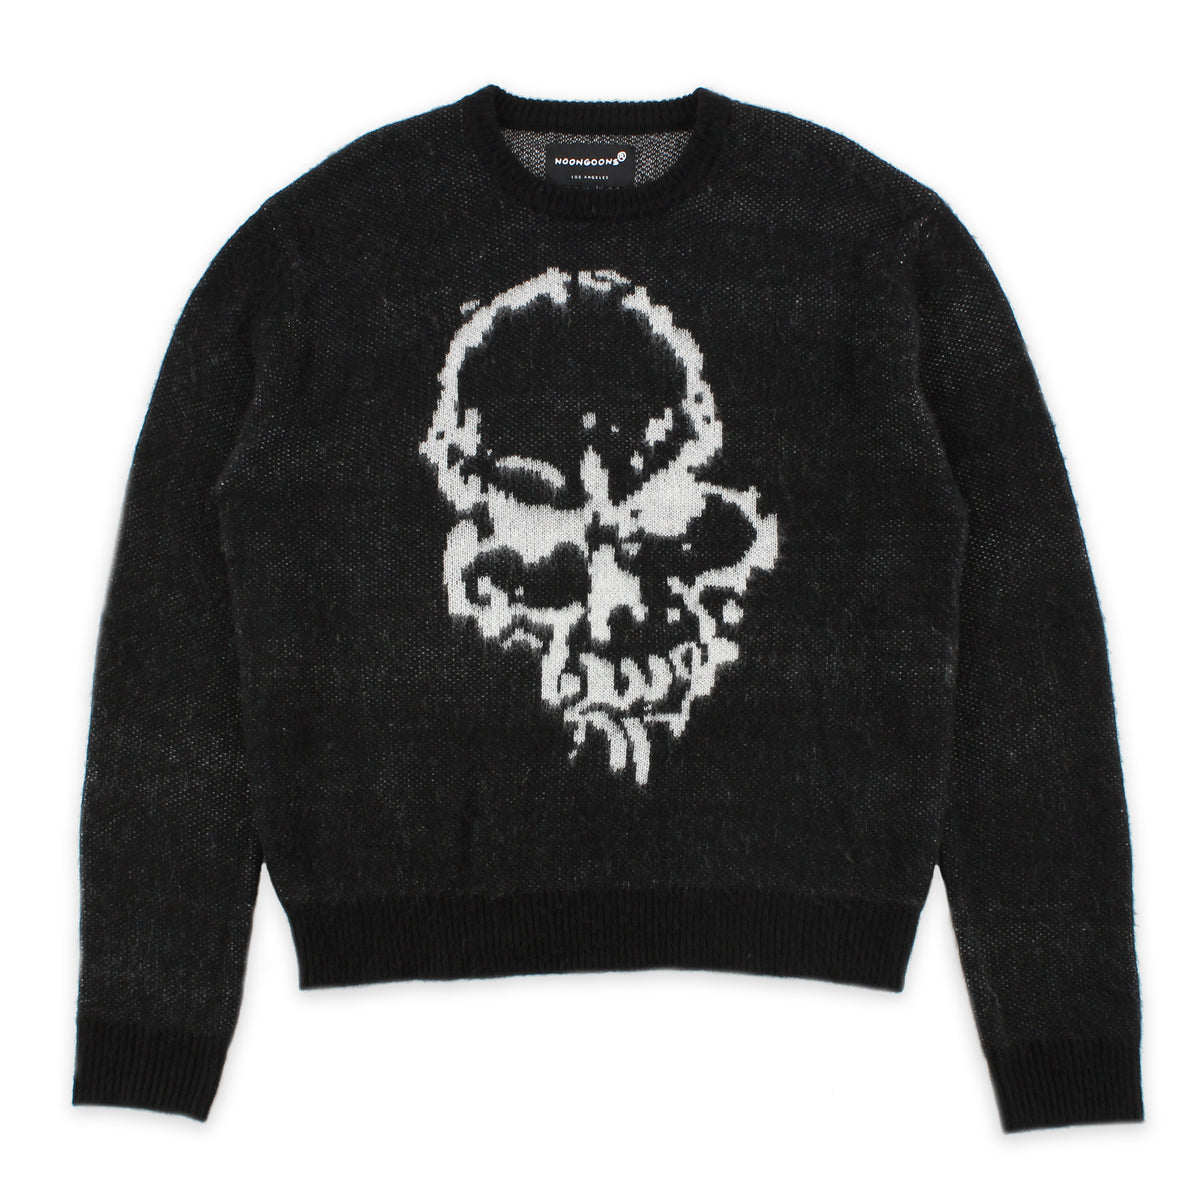 Gatekeeper Sweater - Black